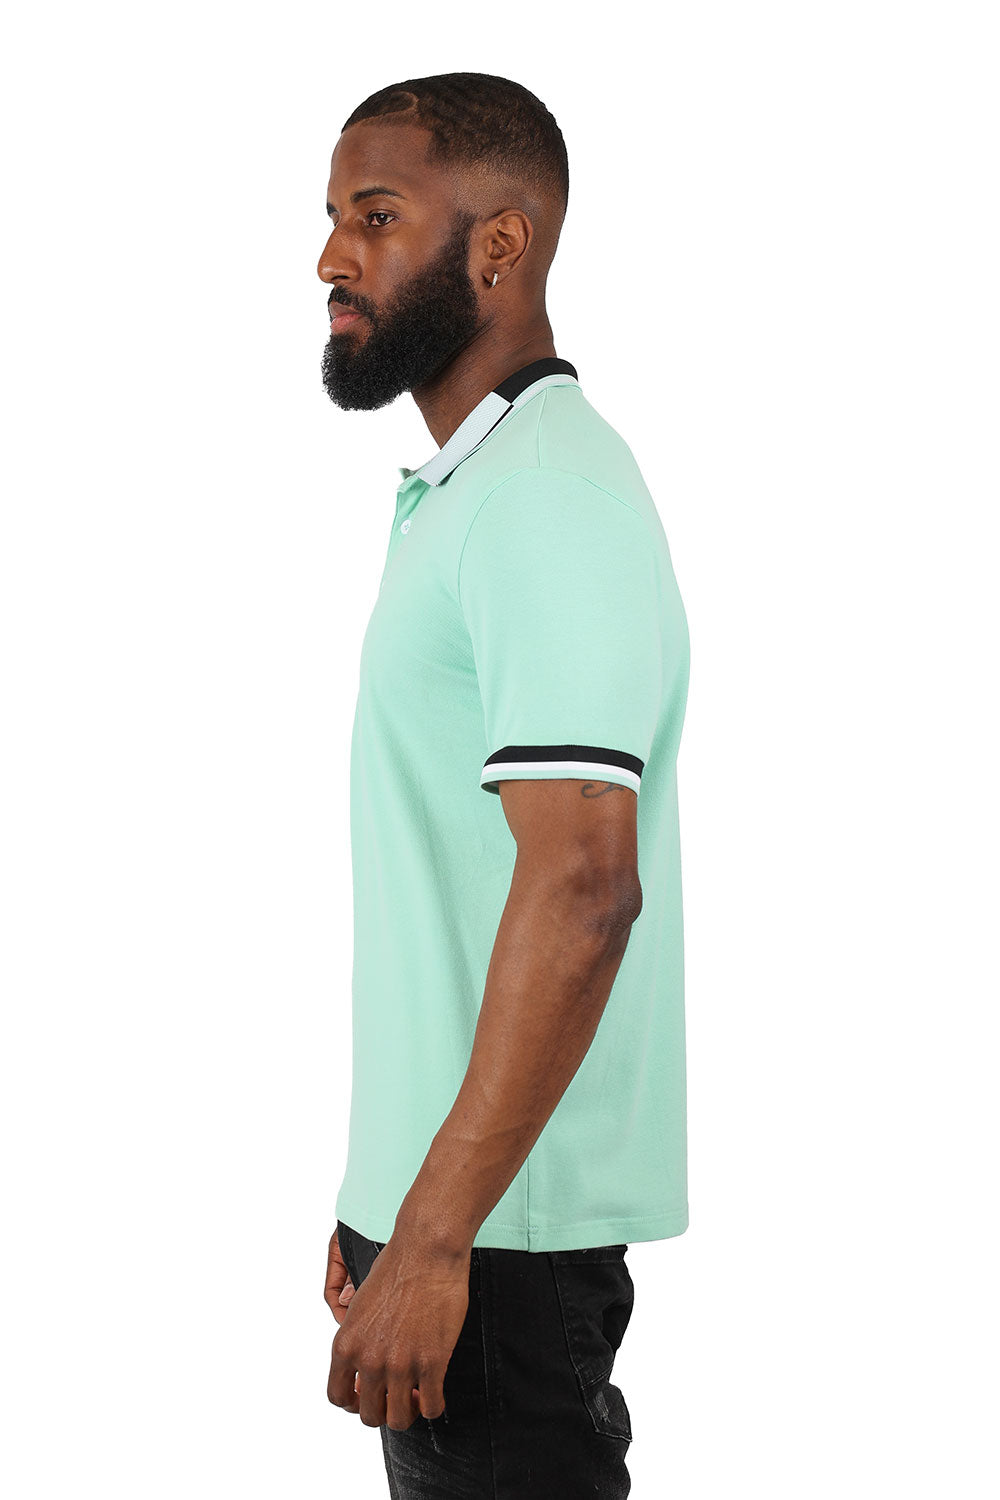 BARABAS Men's Premium Solid Color Short Sleeve Polo shirts 3PP839 mint